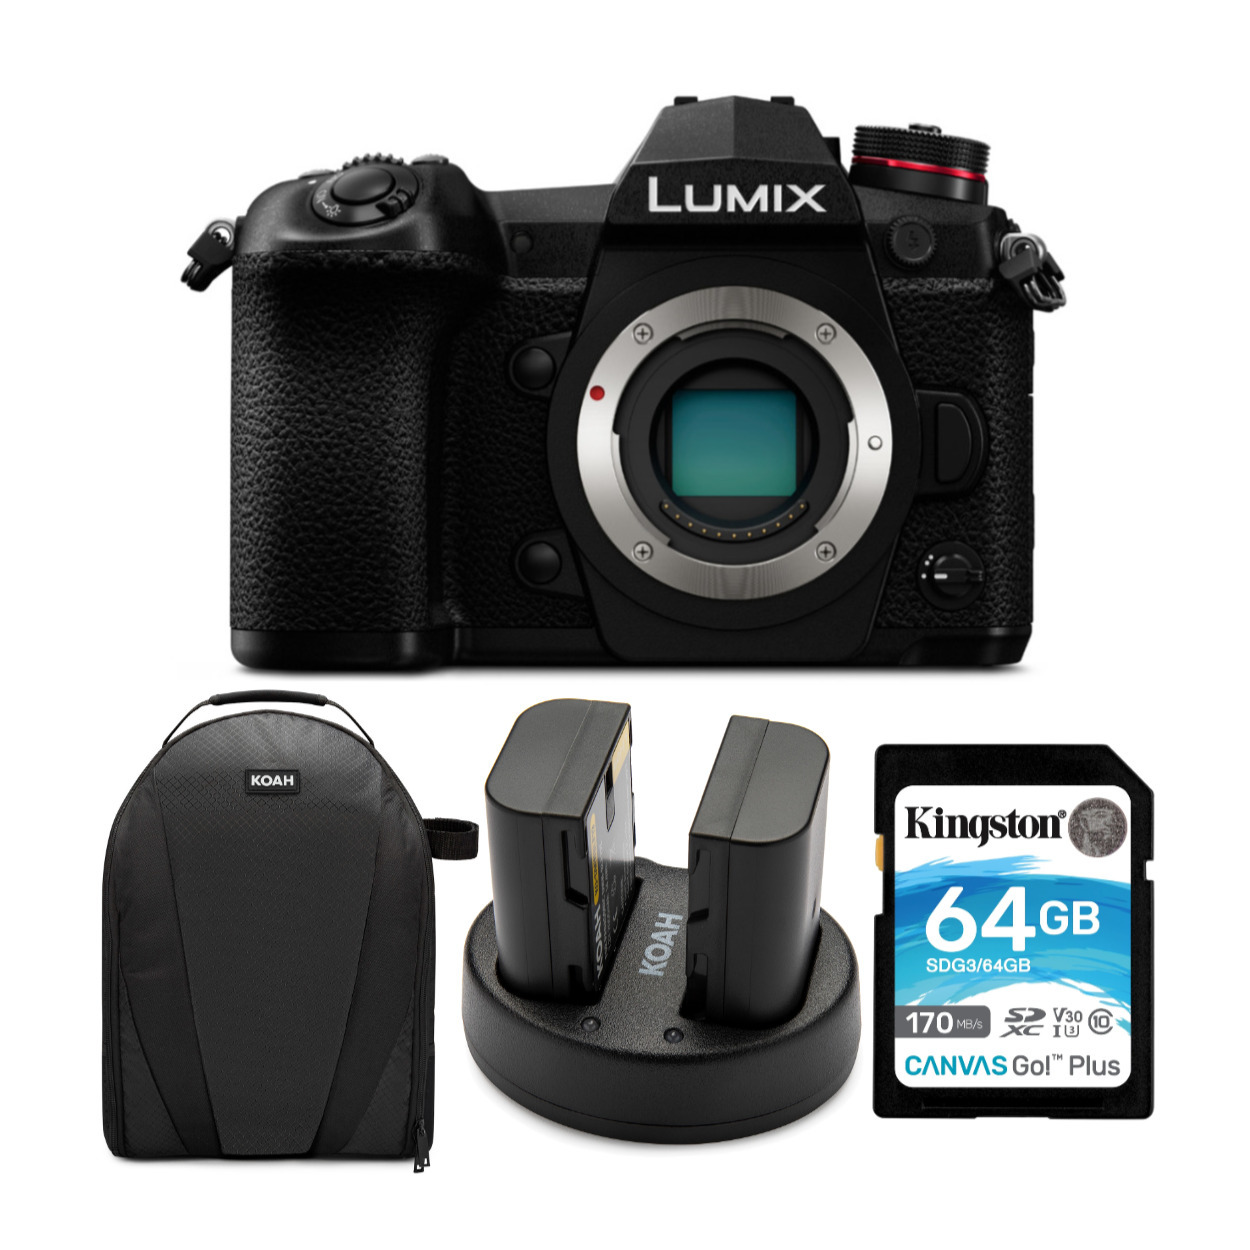 Panasonic LUMIX G9 20.3MP Mirrorless Camera Body with Camera Bag, Battery and Memory Card in Black